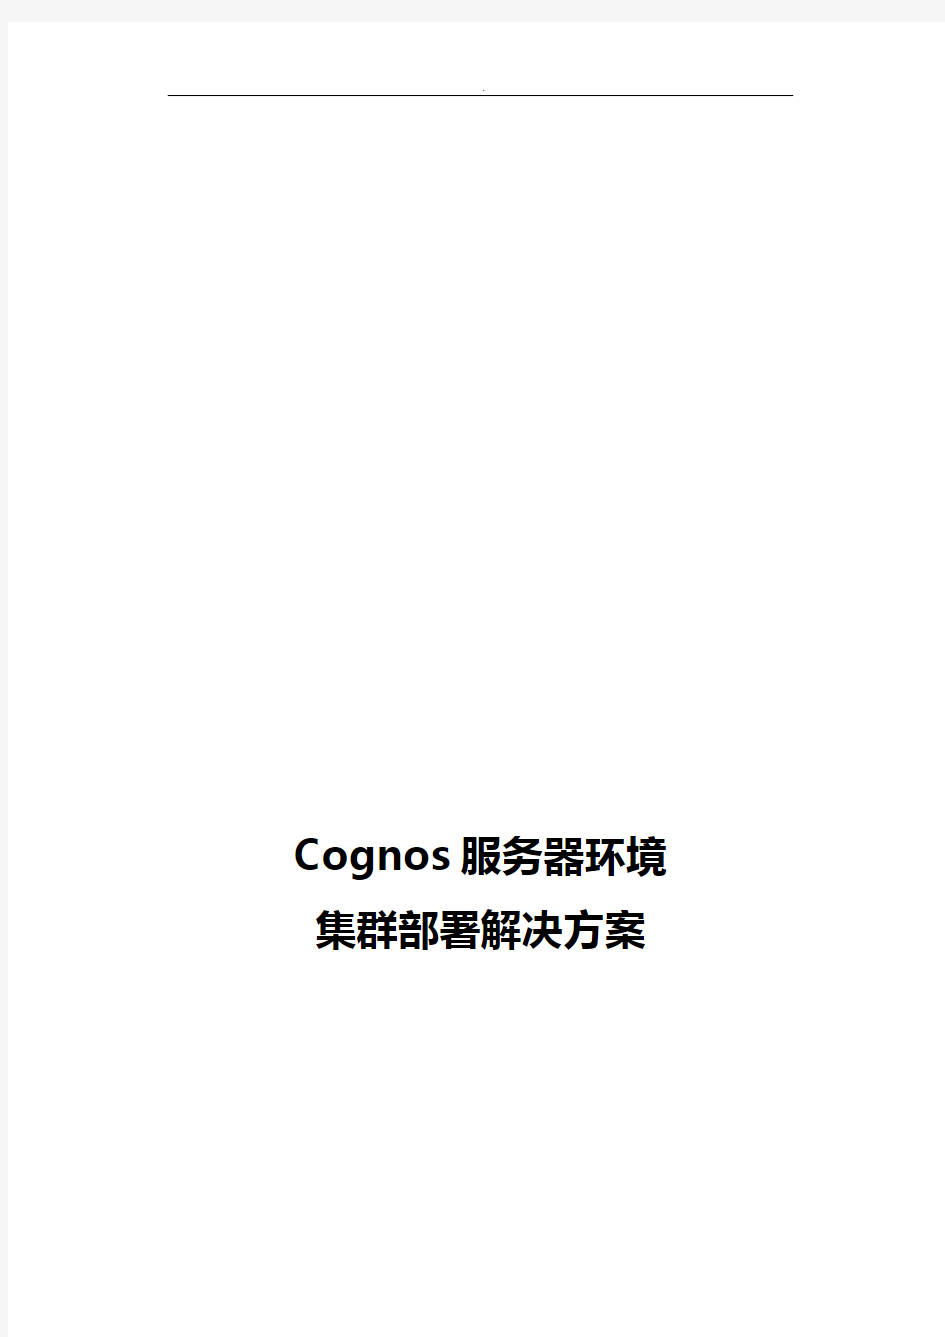 Cognos服务器环境集群部署处理办法